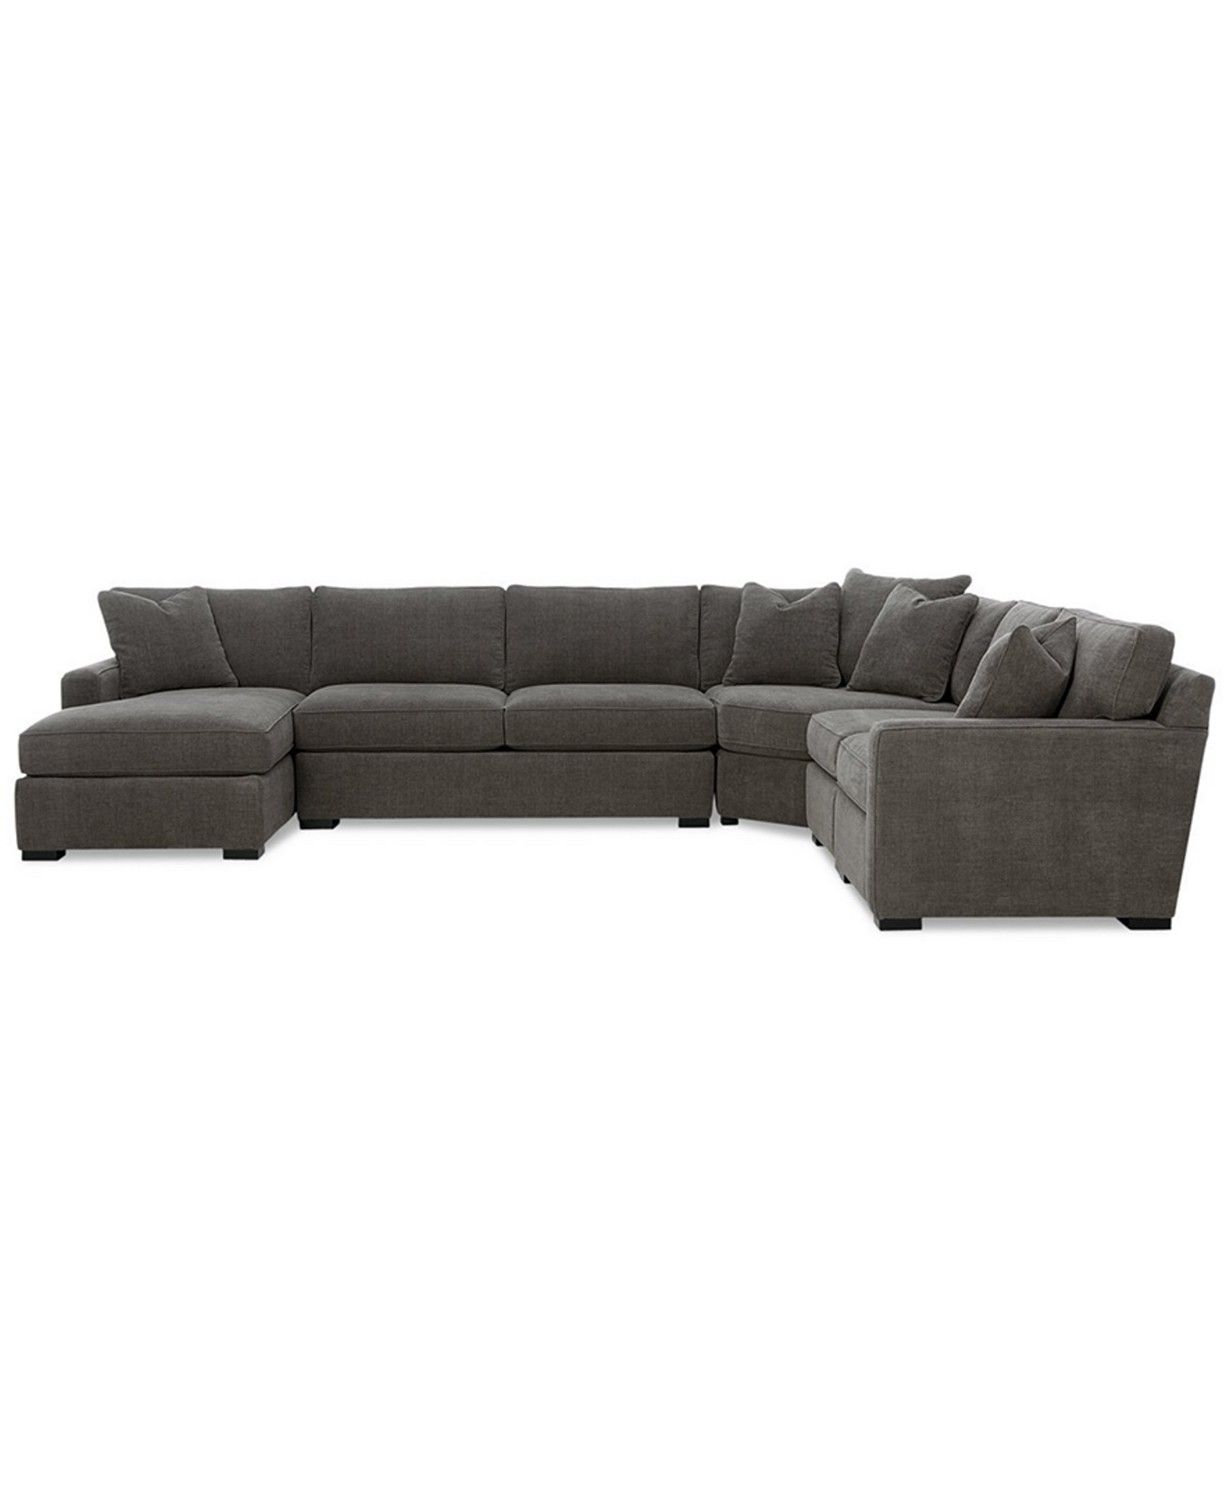 Radley 5-Piece Fabric Chaise Sectional Sofa, Created for Macy's | Macys (US)